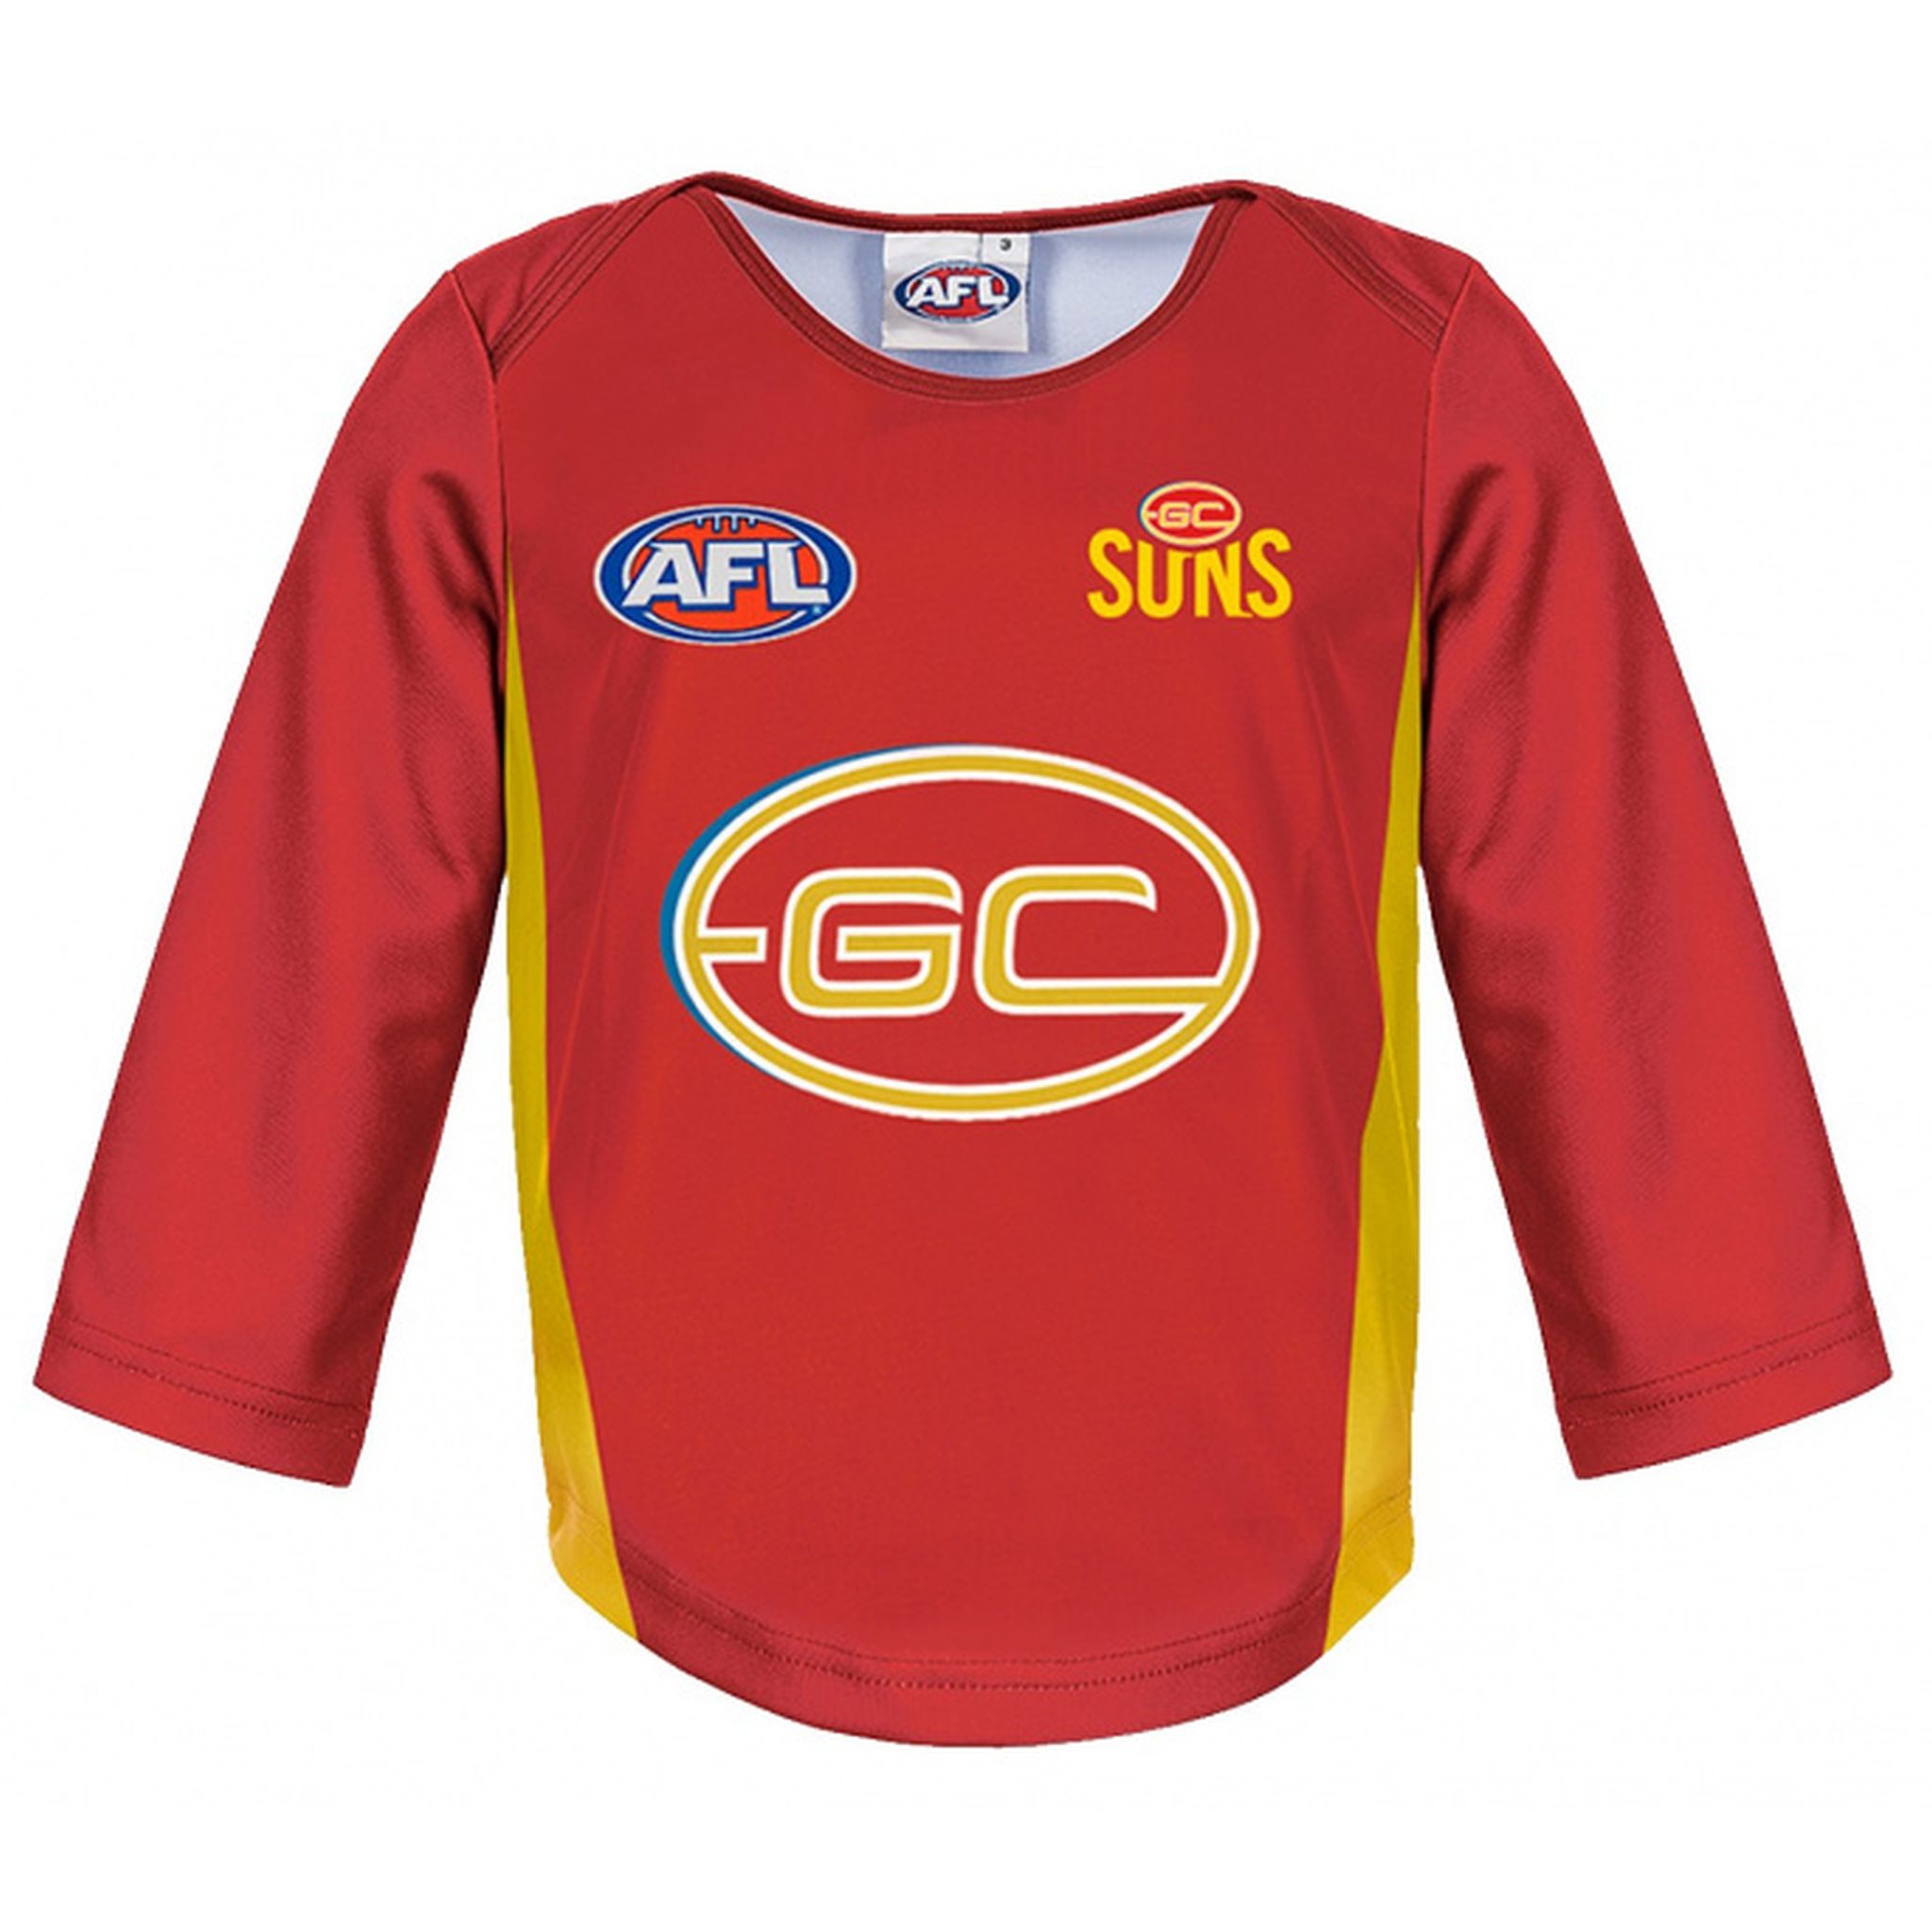 Burley Gold Coast Suns AFL Infant Long Sleeve Replica Guernsey - (SIZE 2)